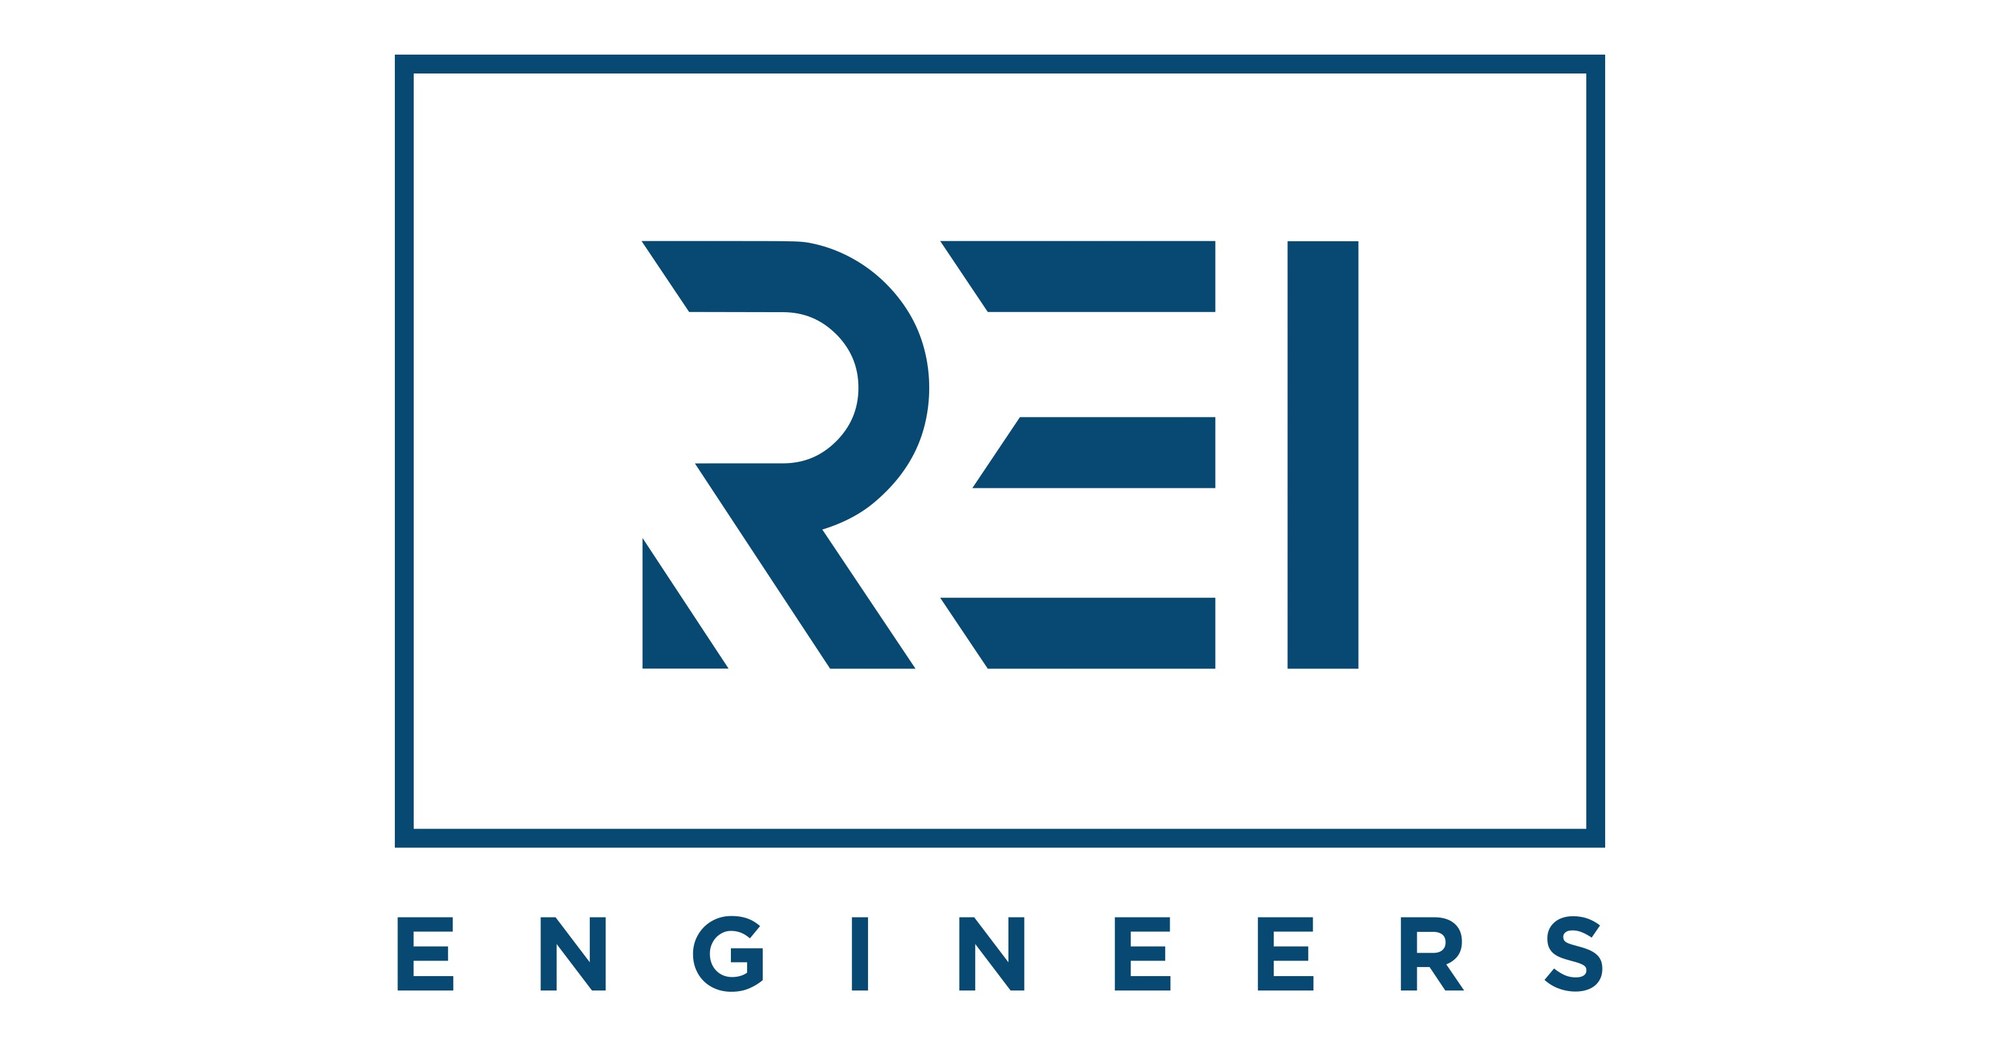 Roof Engineering Associates Joins REI Engineers, Inc.